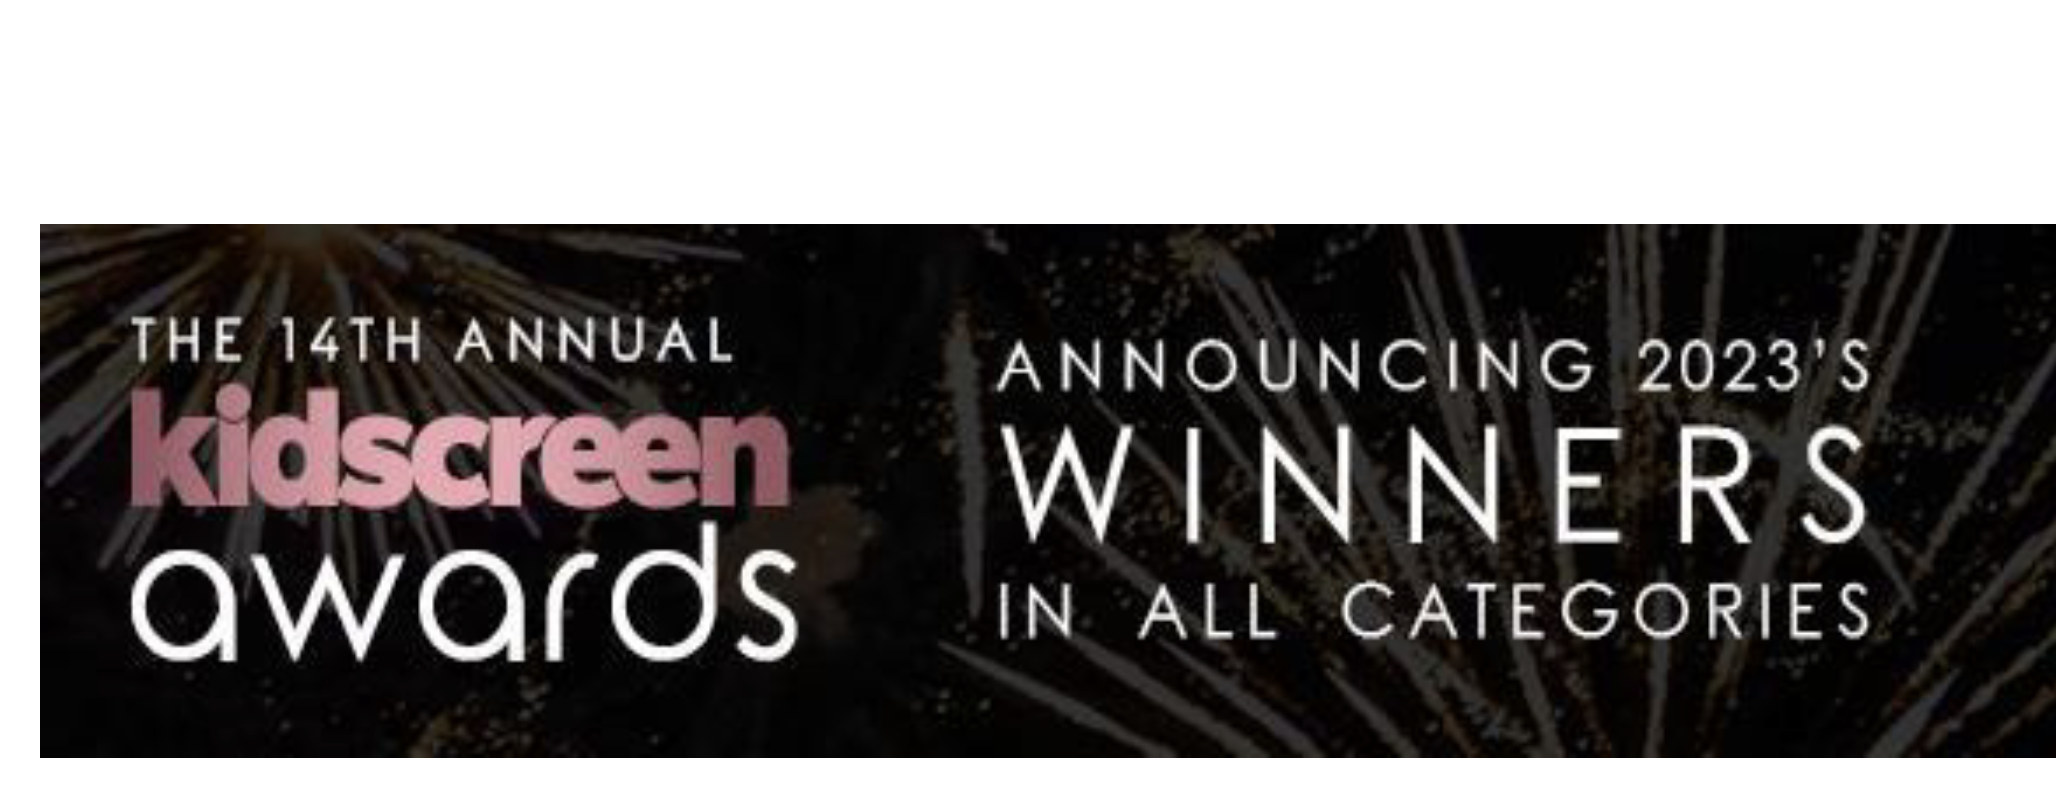 Warrior Cats wins Best Alternative Game at 2023 Kidscreen Awards! – Coolabi